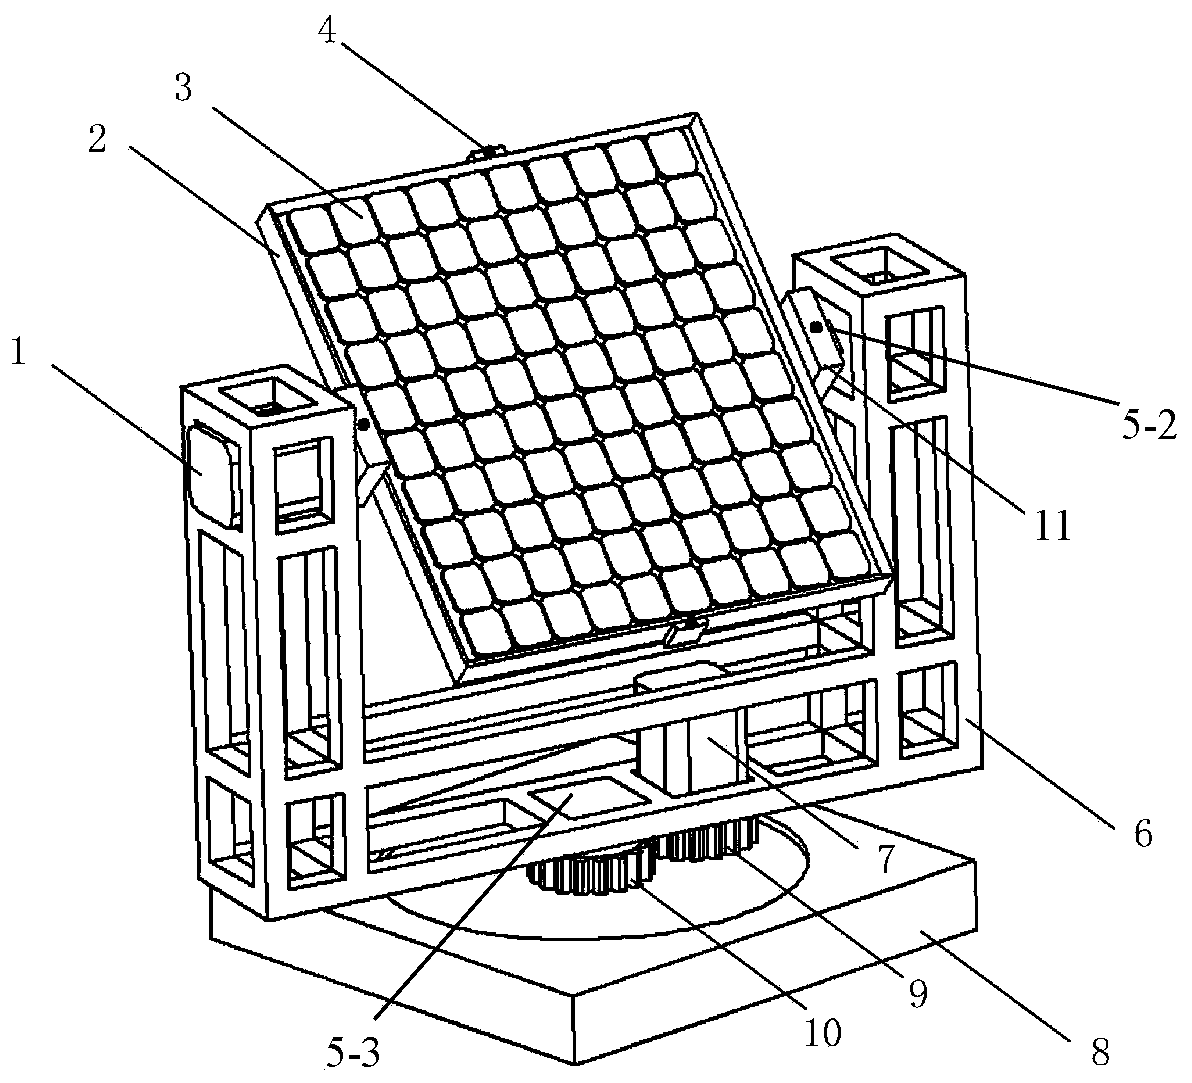 Novel biaxial photovoltaic tracker